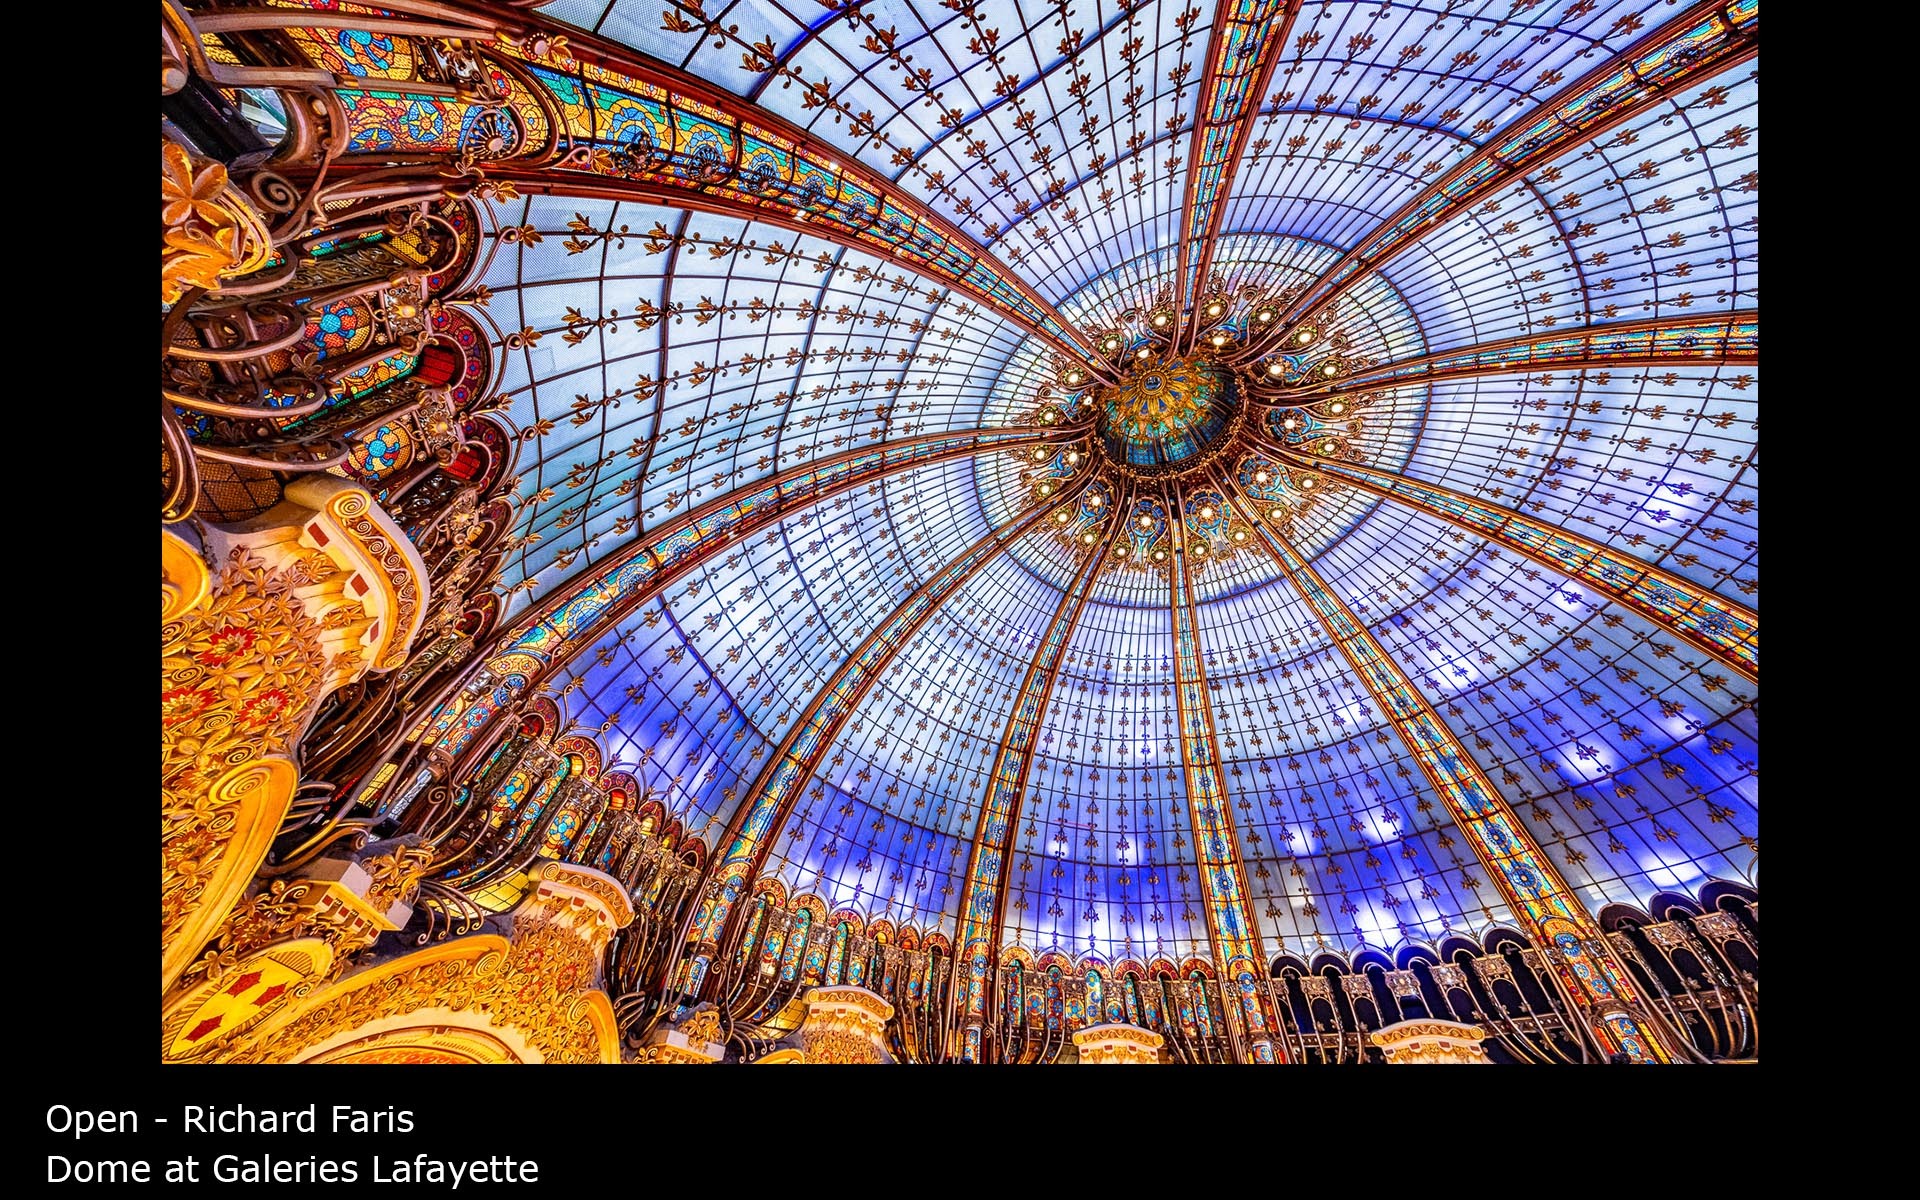 Dome at Galeries Lafayette - Richard Faris